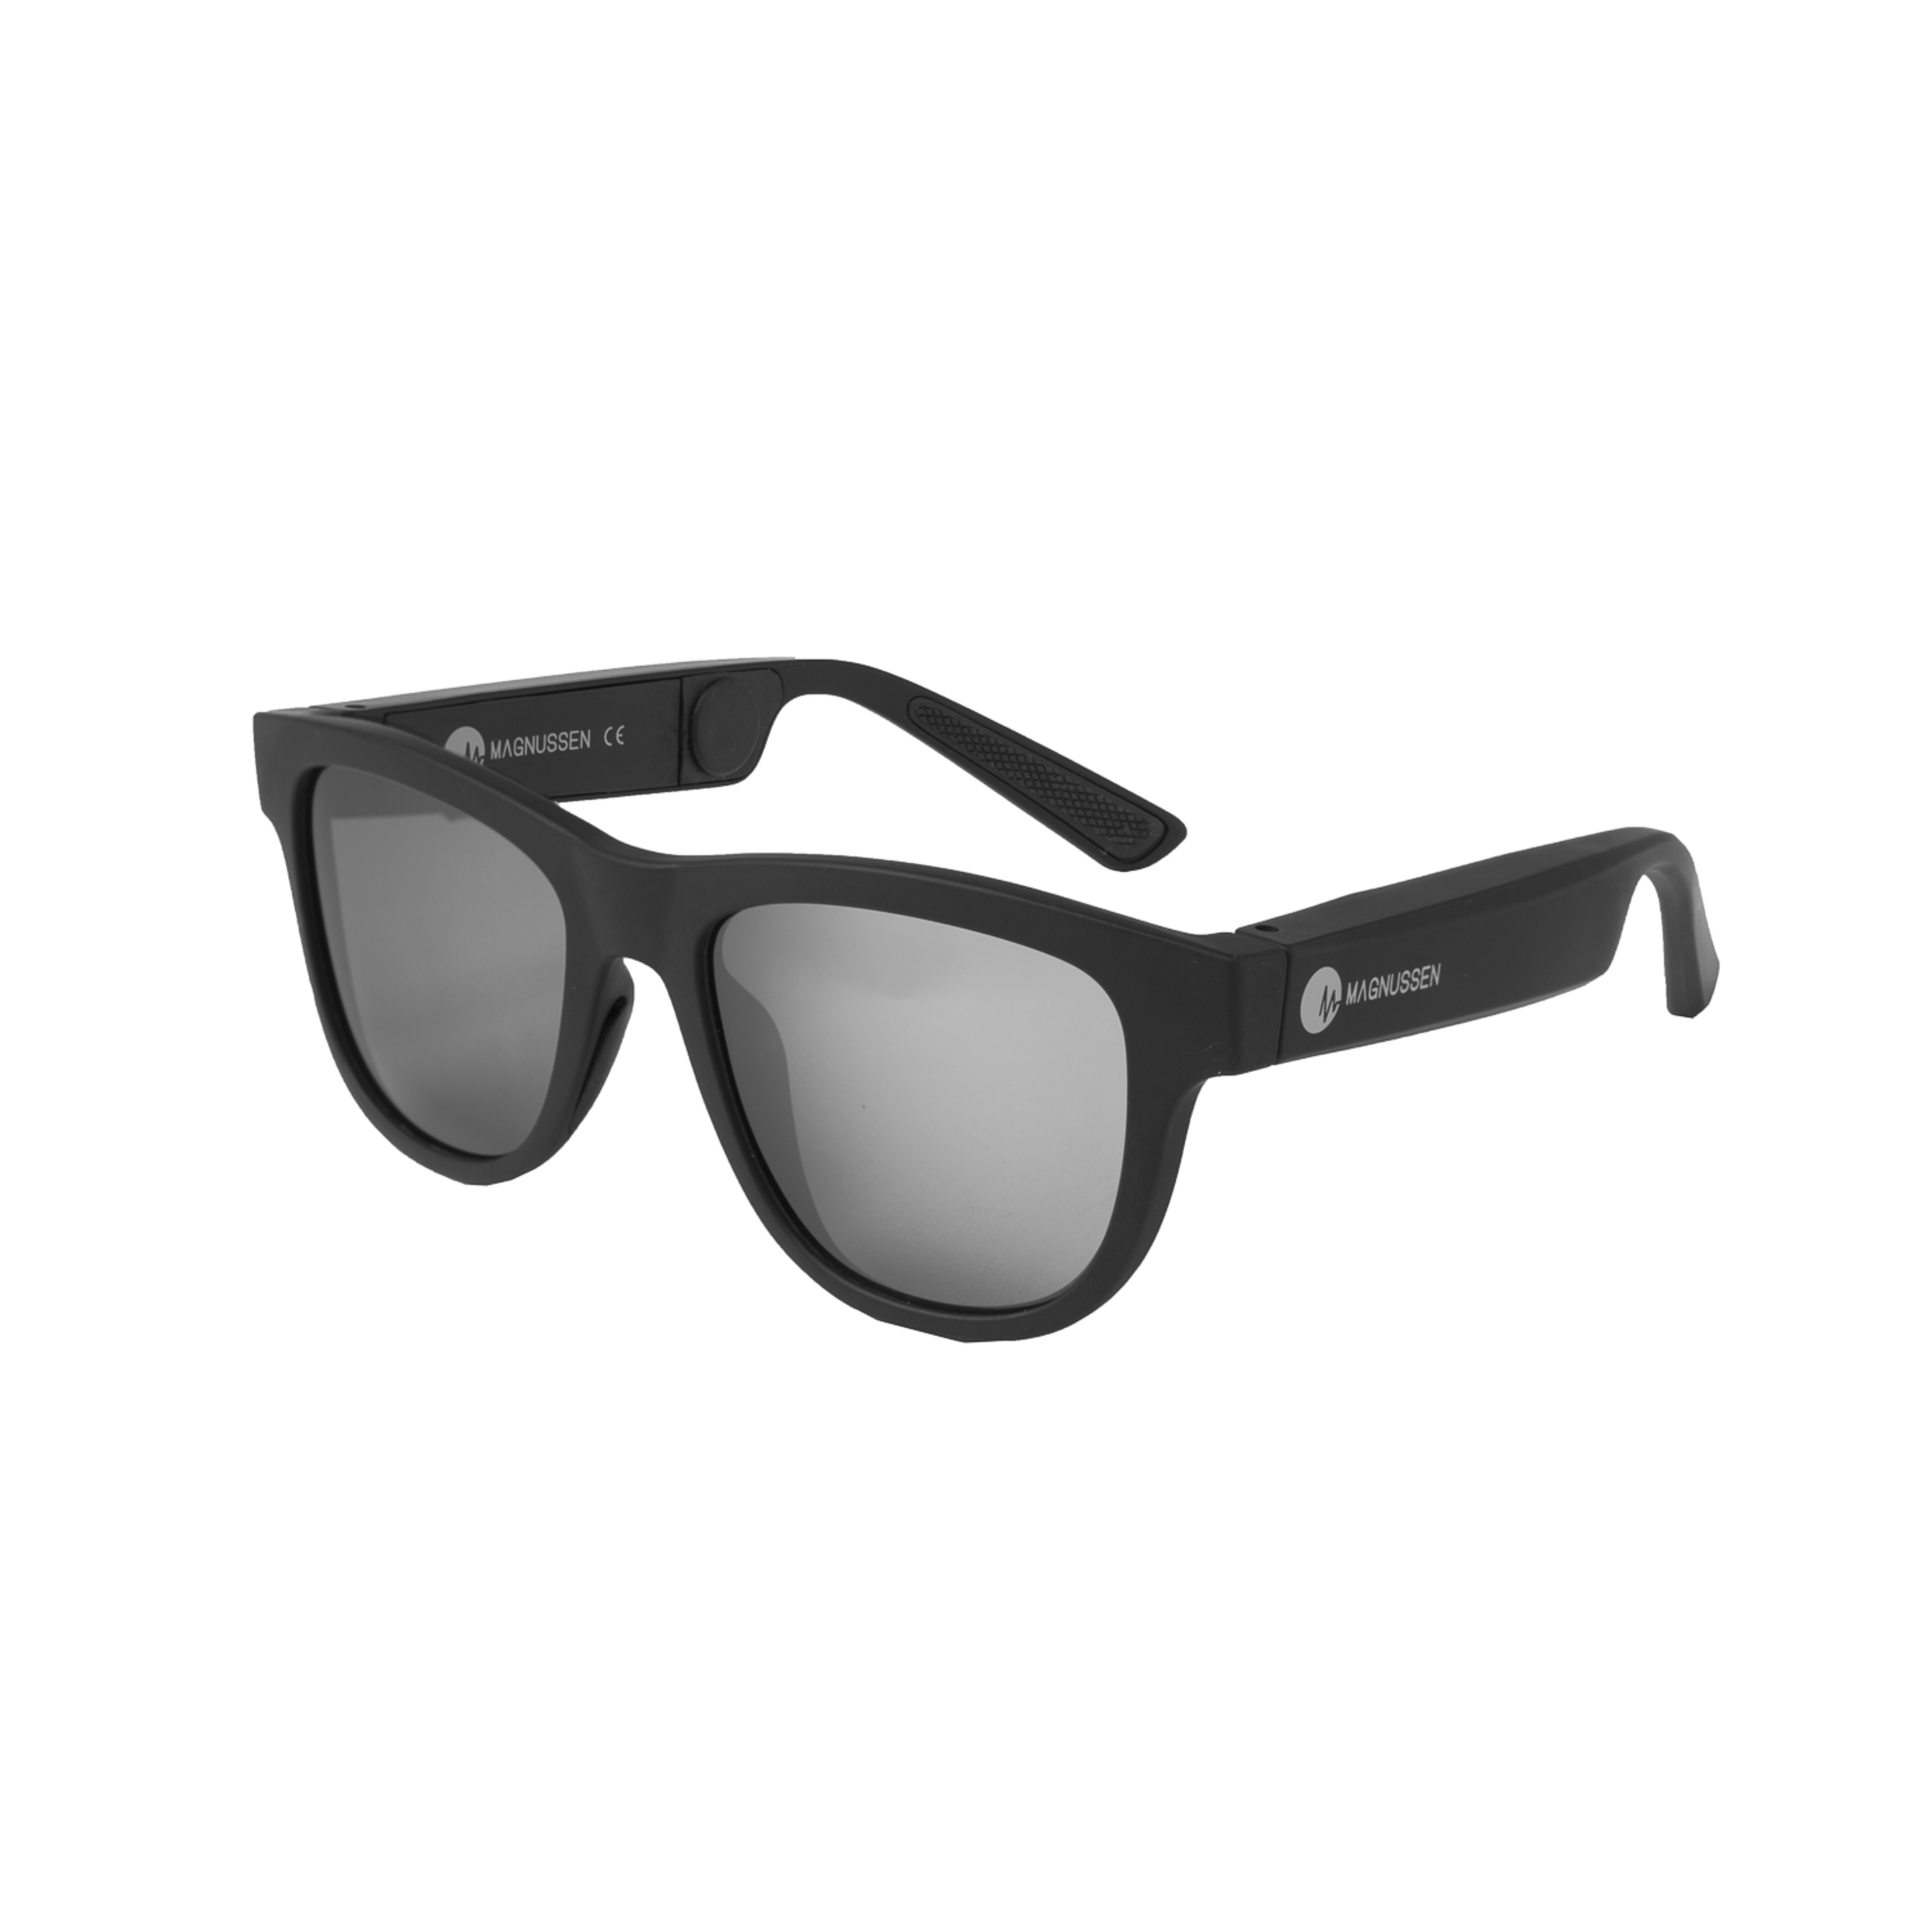 Gafas De Sol Magnussen G1 Bluetooth - negro - 